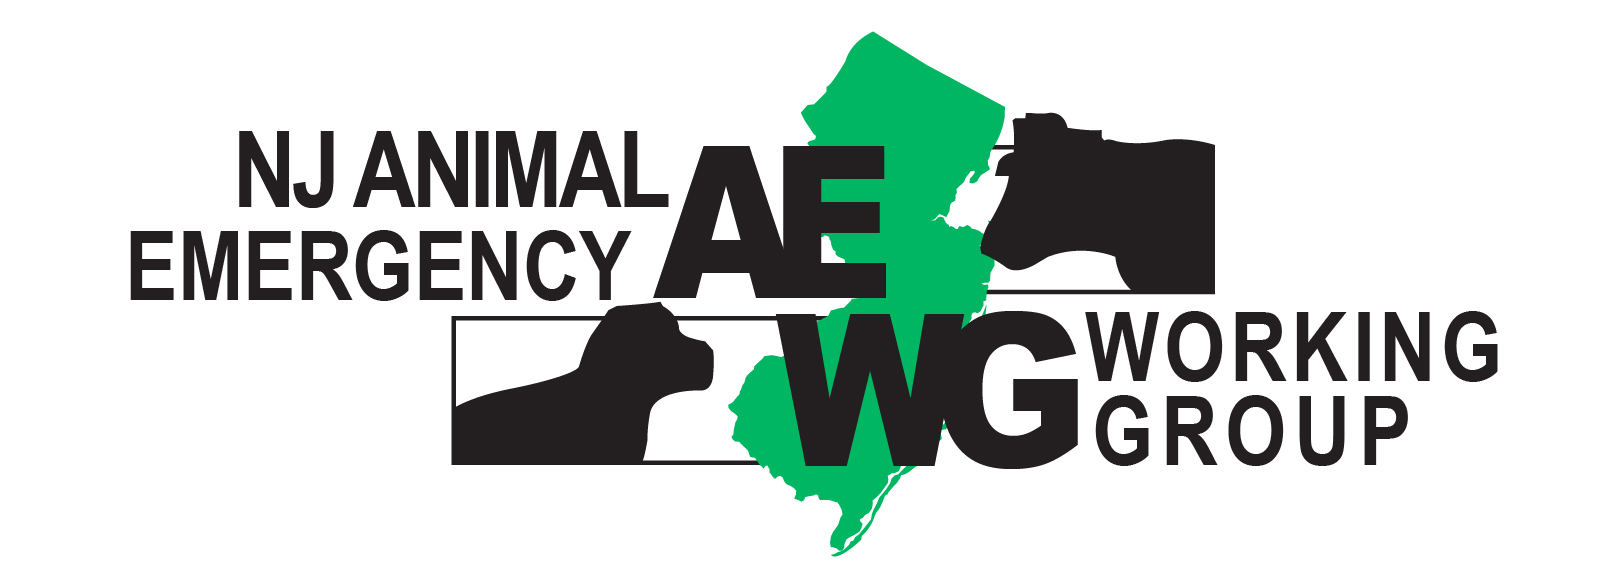 NJ Animal Emergency Working Group : Logo